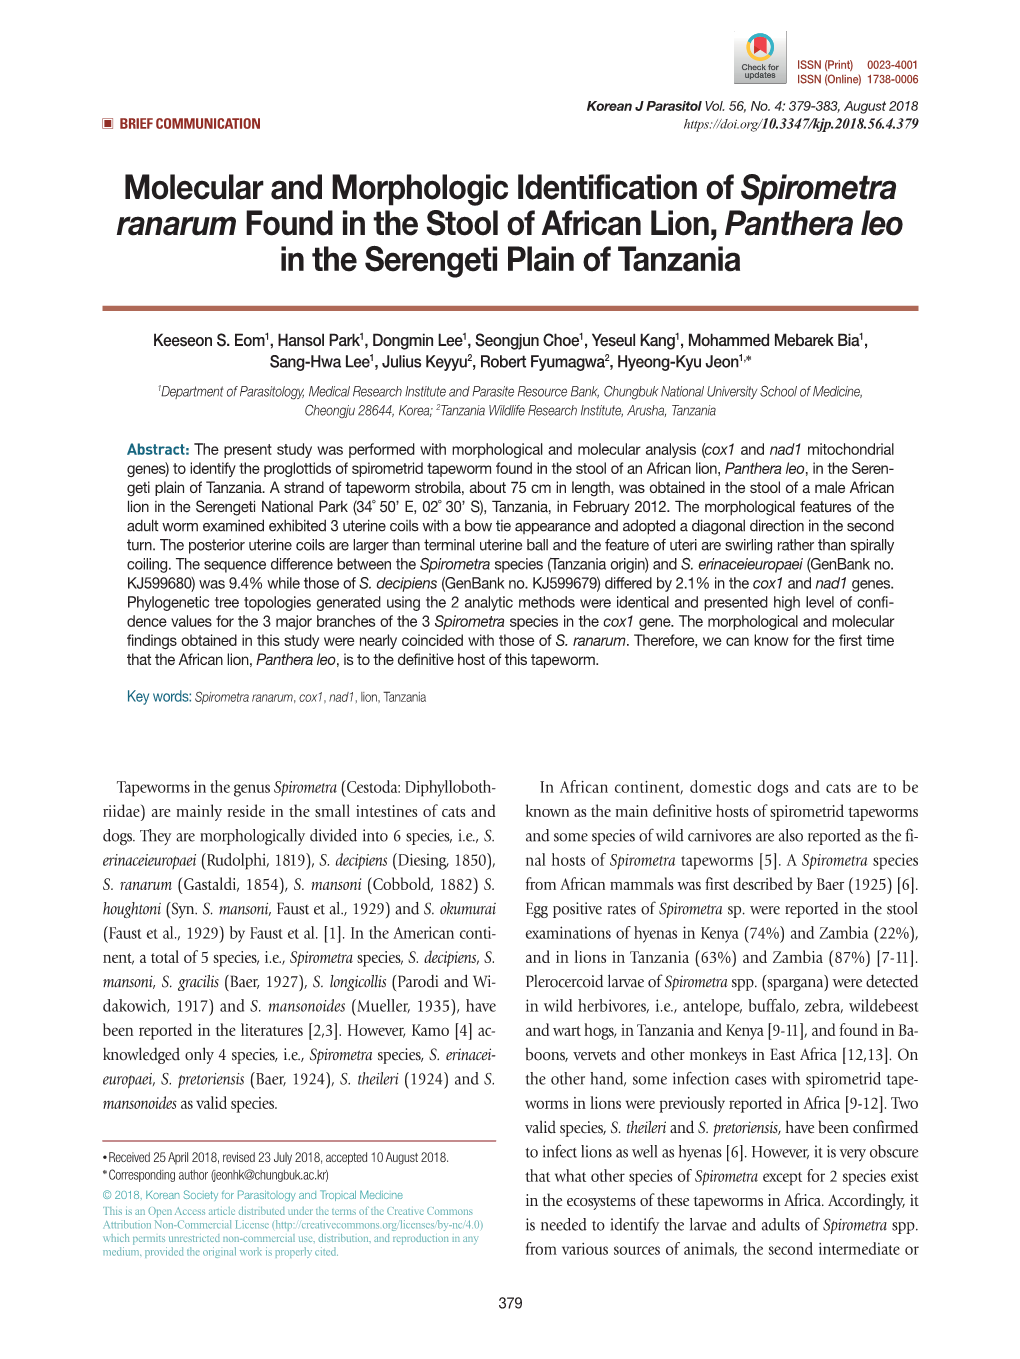 Molecular and Morphologic Identification of Spirometra Ranarum Found in the Stool of African Lion, Panthera Leo in the Serengeti Plain of Tanzania